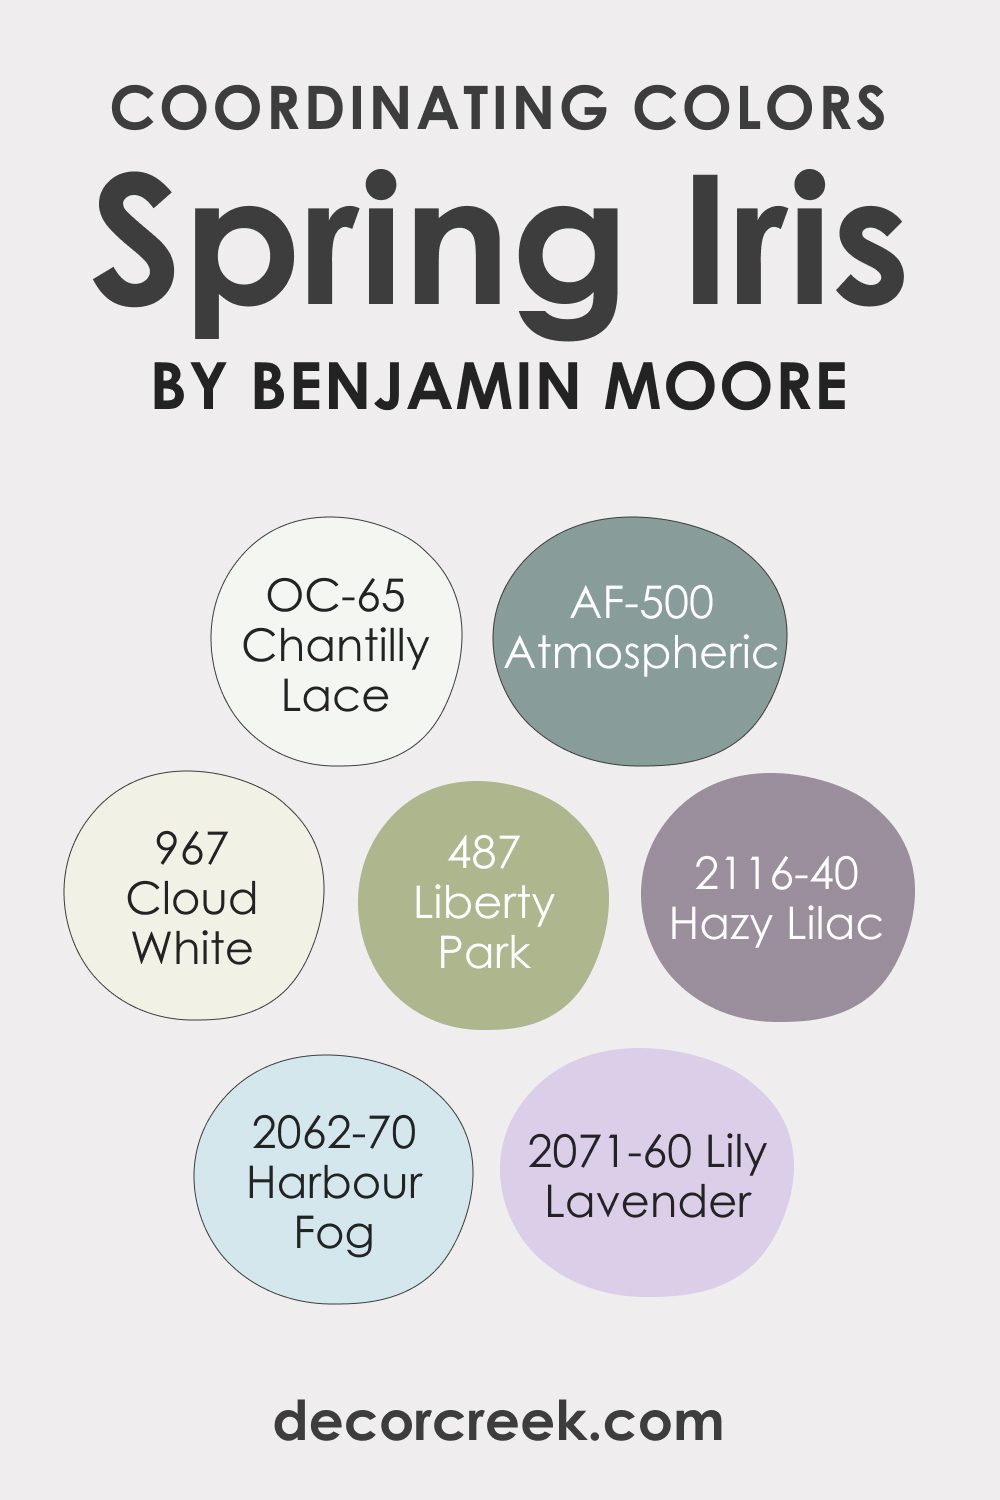 Coordinating Colors of Spring Iris 1402